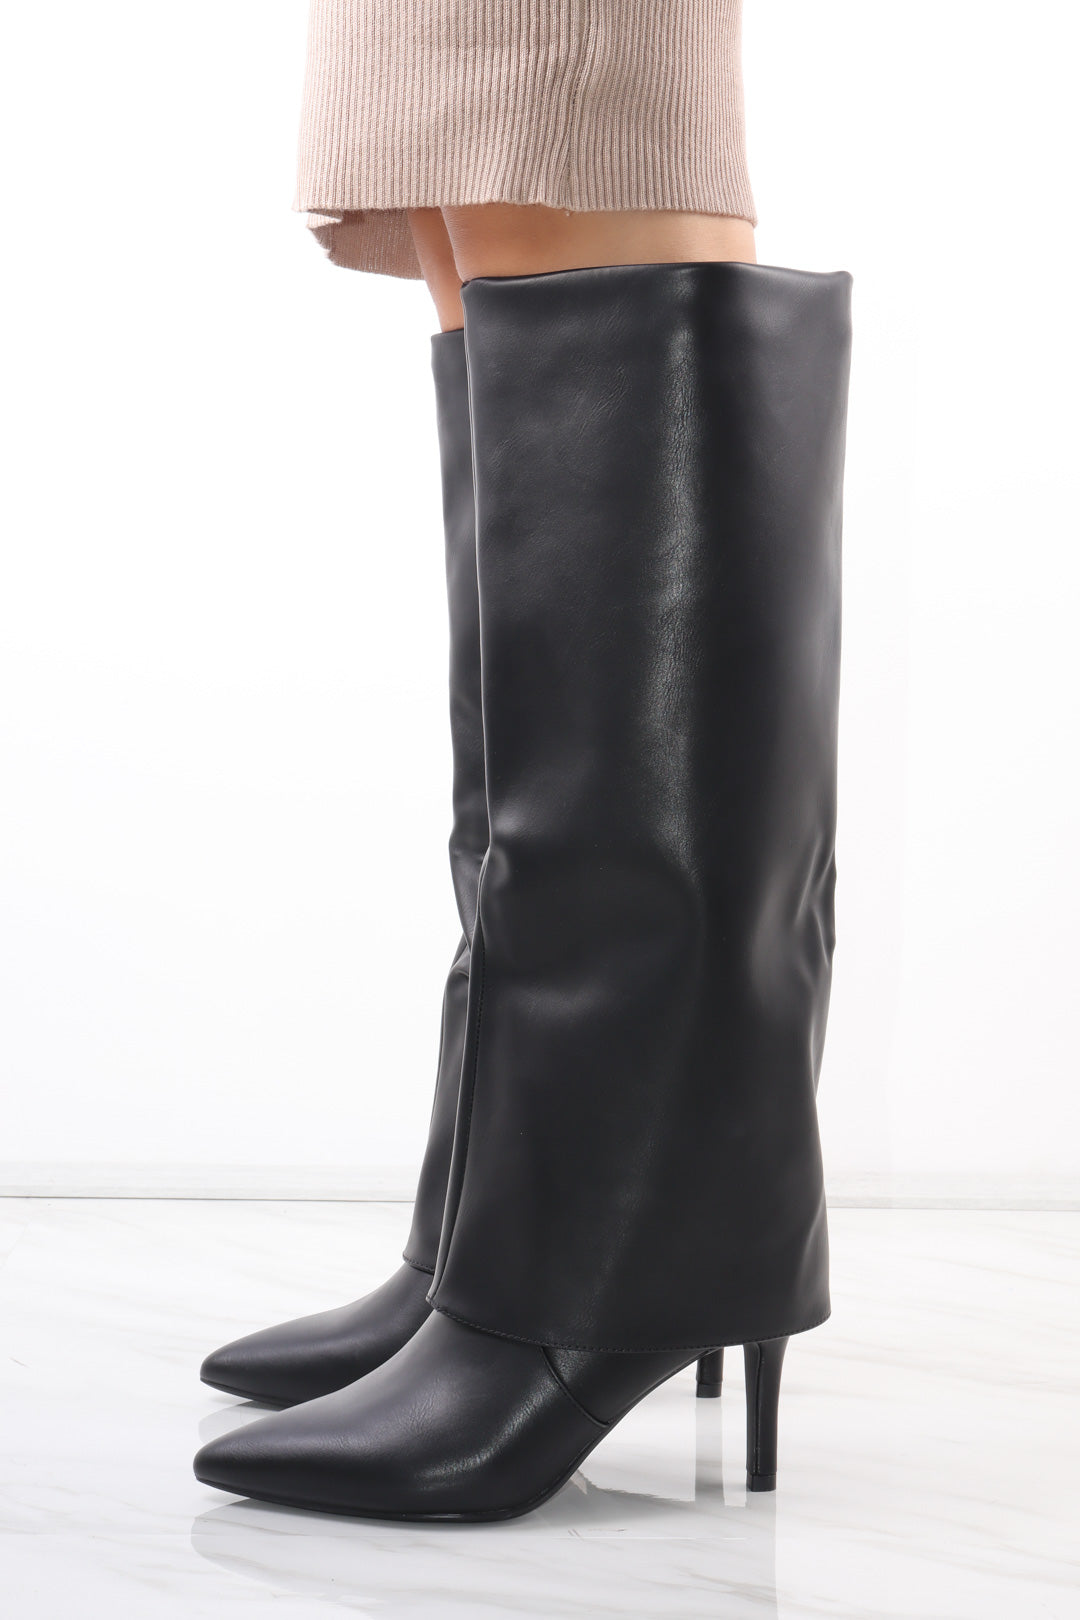 Black Stiletto Leather Fold Over Shark Buckle Knee High Boot